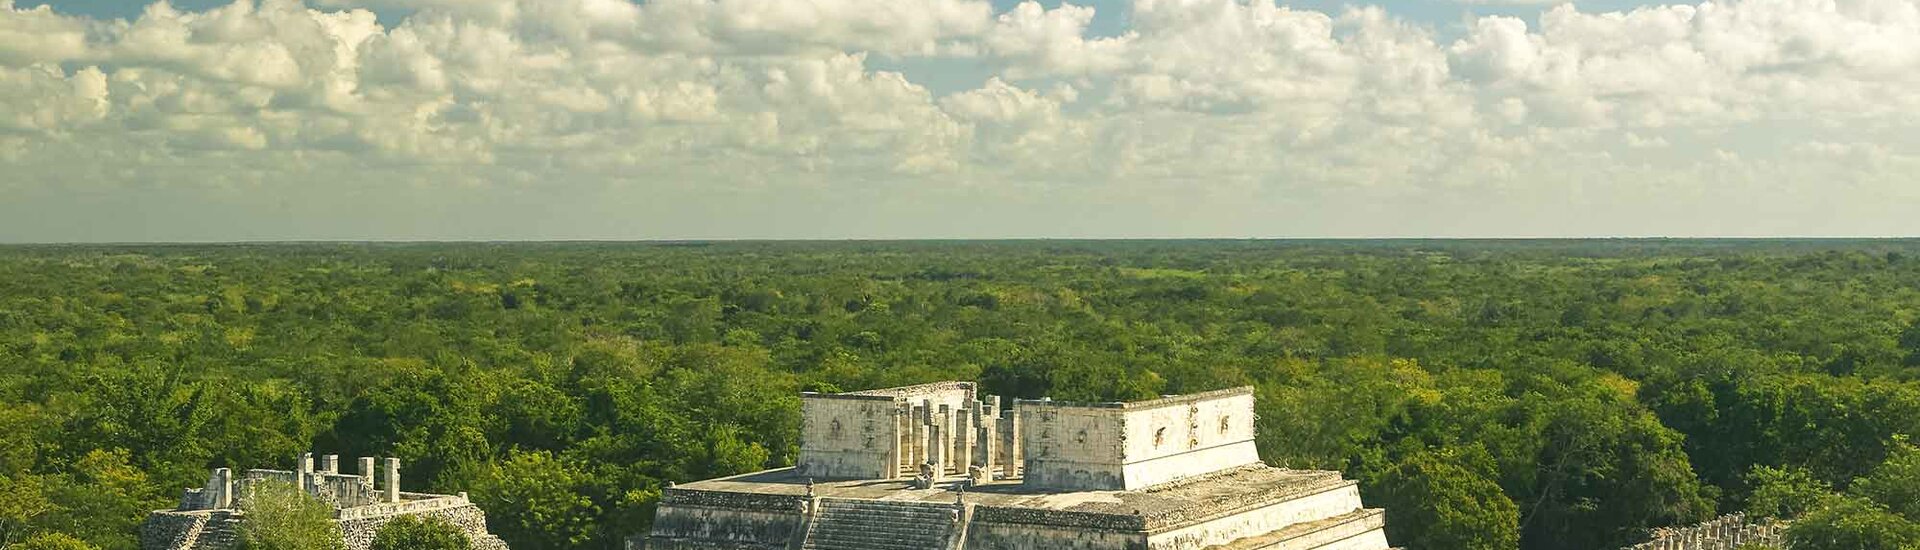 Kriegertempel der alten Maya-Stadt Chichén Itzá